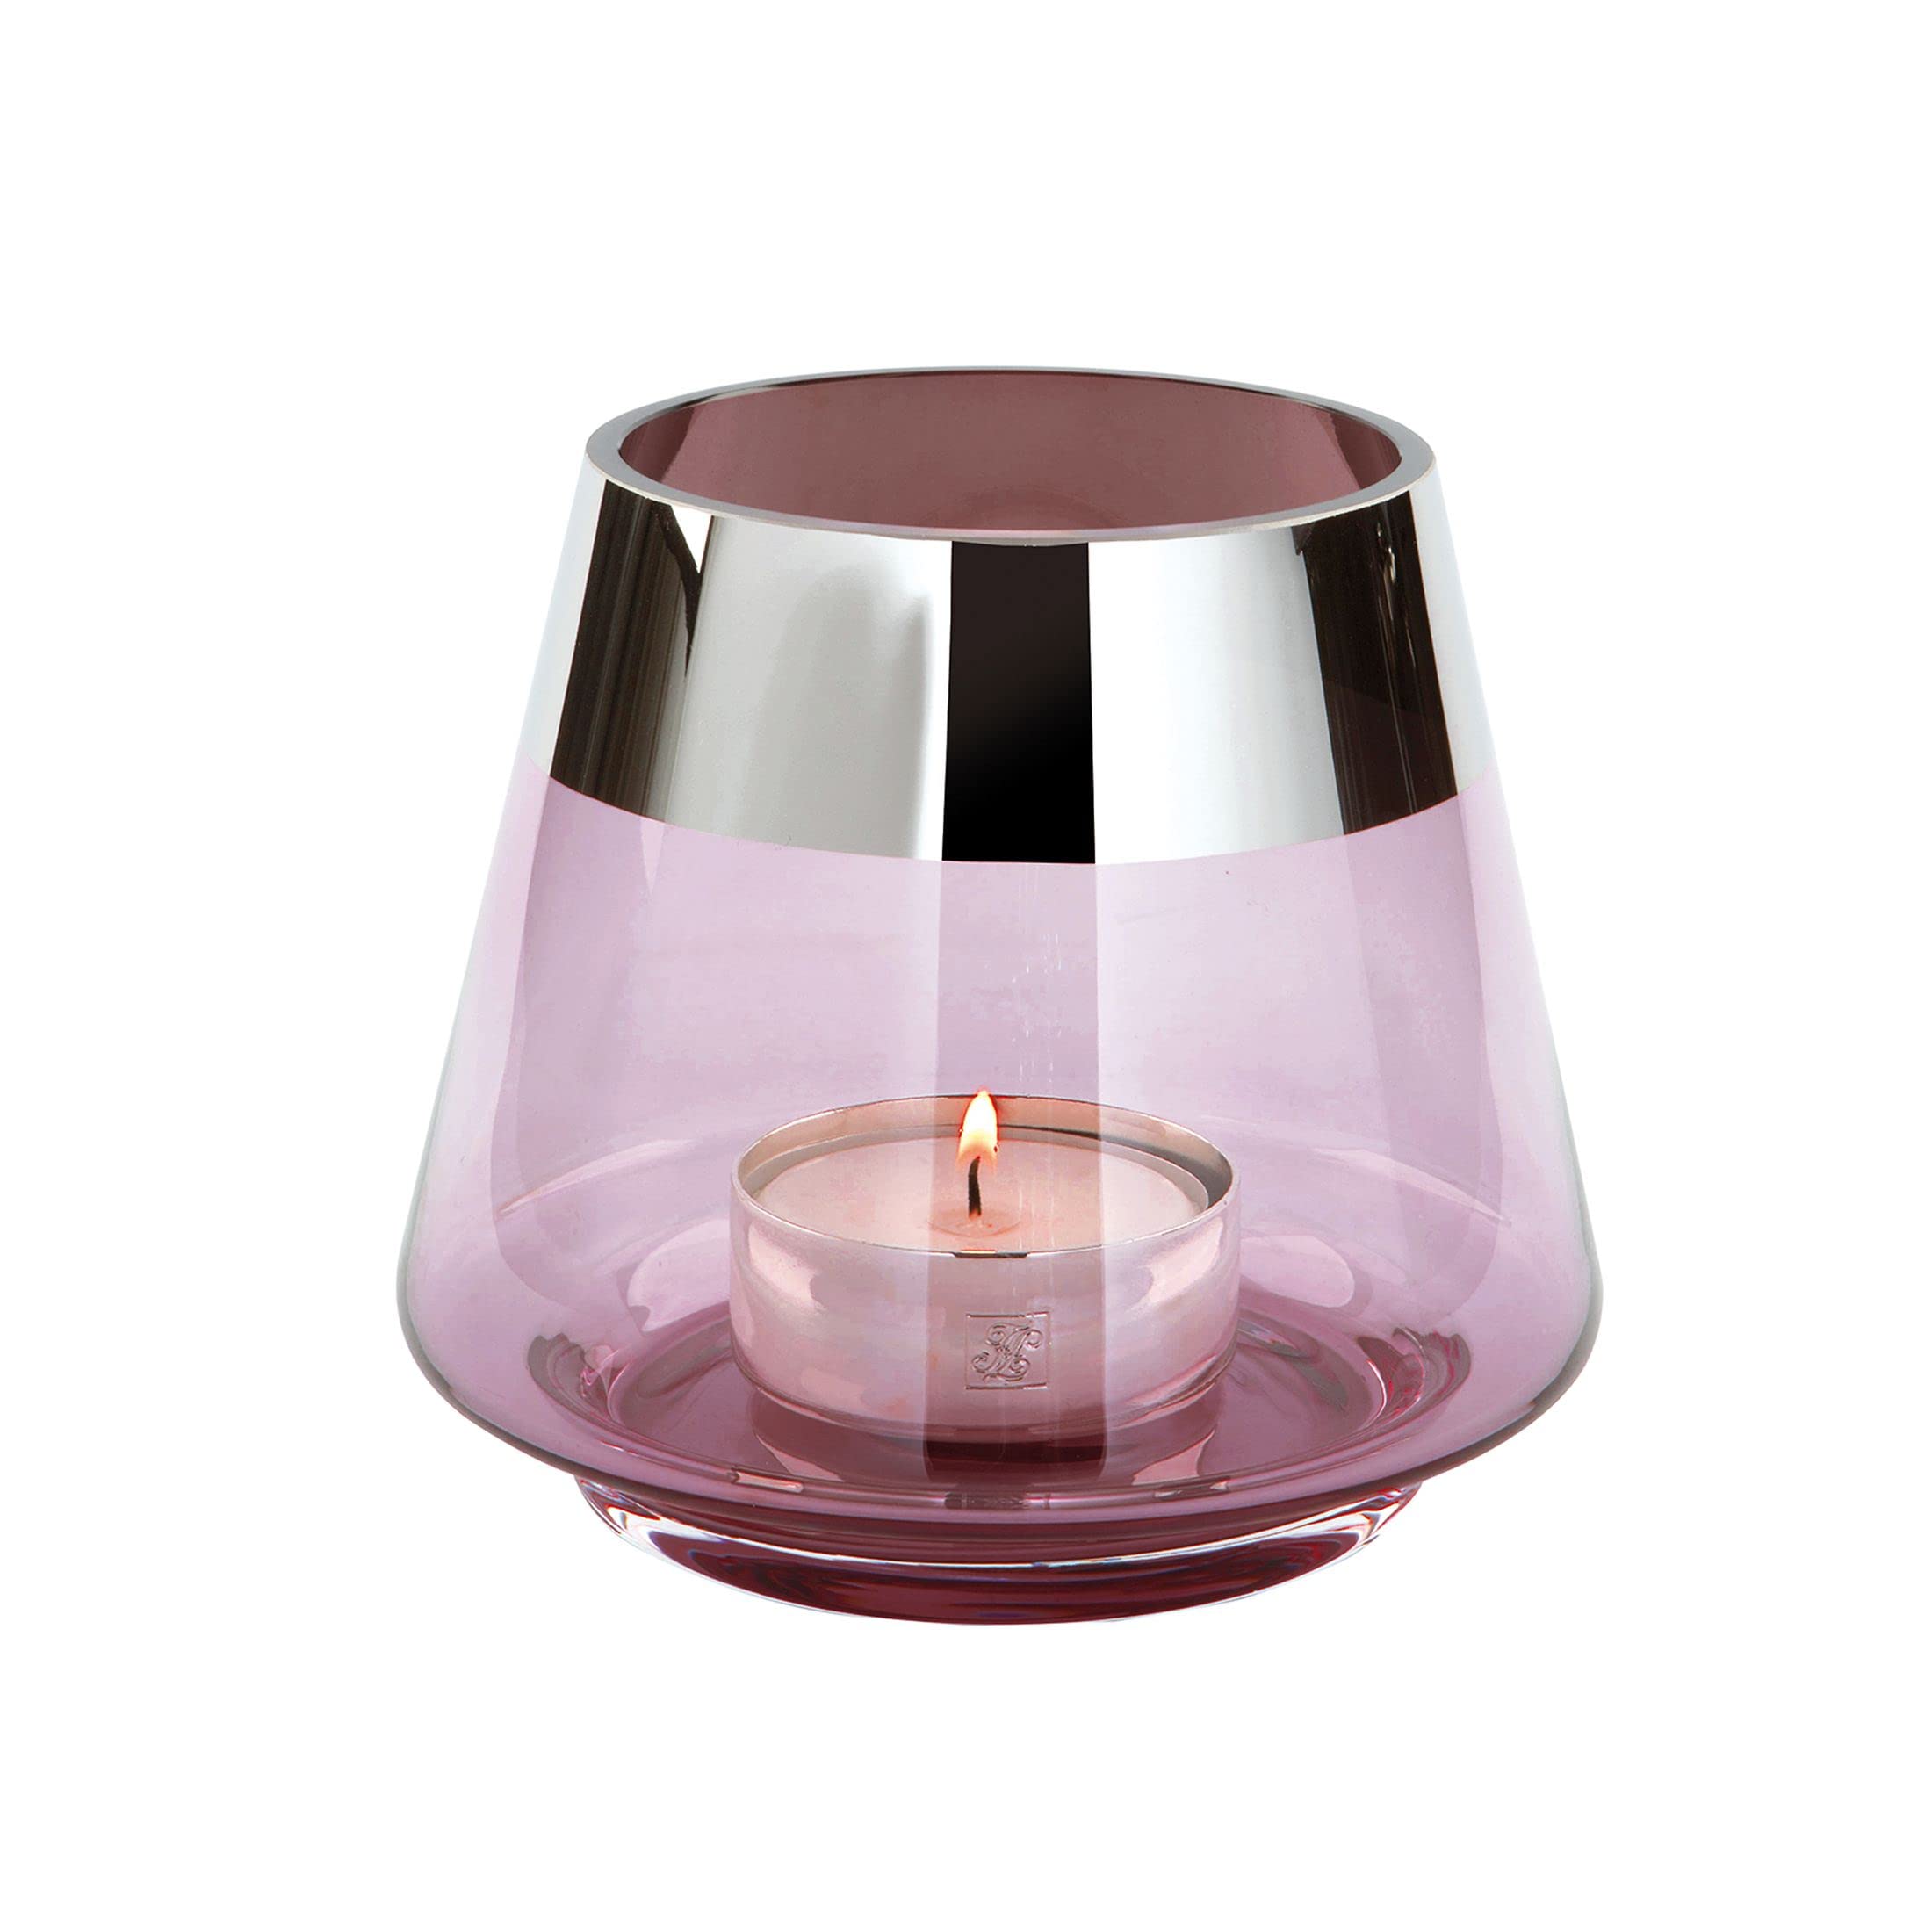 Fink JONA Teelichthalter Glas hellrosa silberfarbener Rand, foliiert nicht spülmaschinengeeignet, Größe: H 13cm, D 15cm, 115018, 13 x 15 cm